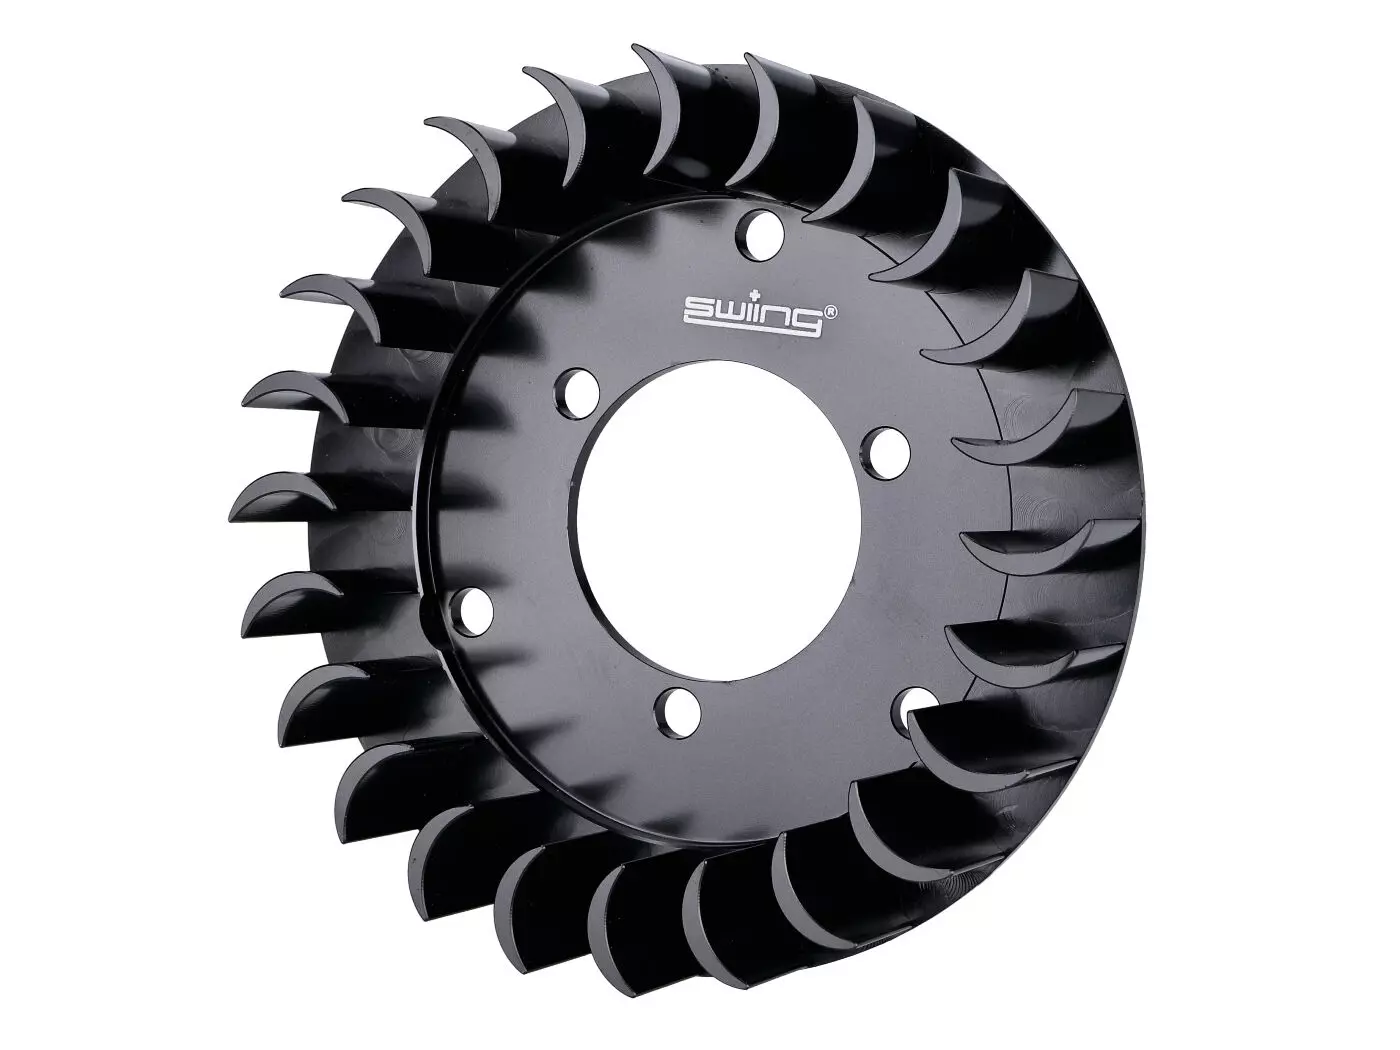 Fan Wheel Swiing Aluminum CNC Black For Sachs 50/2, 50/3, HPI, Bosch, Ducati Ignition